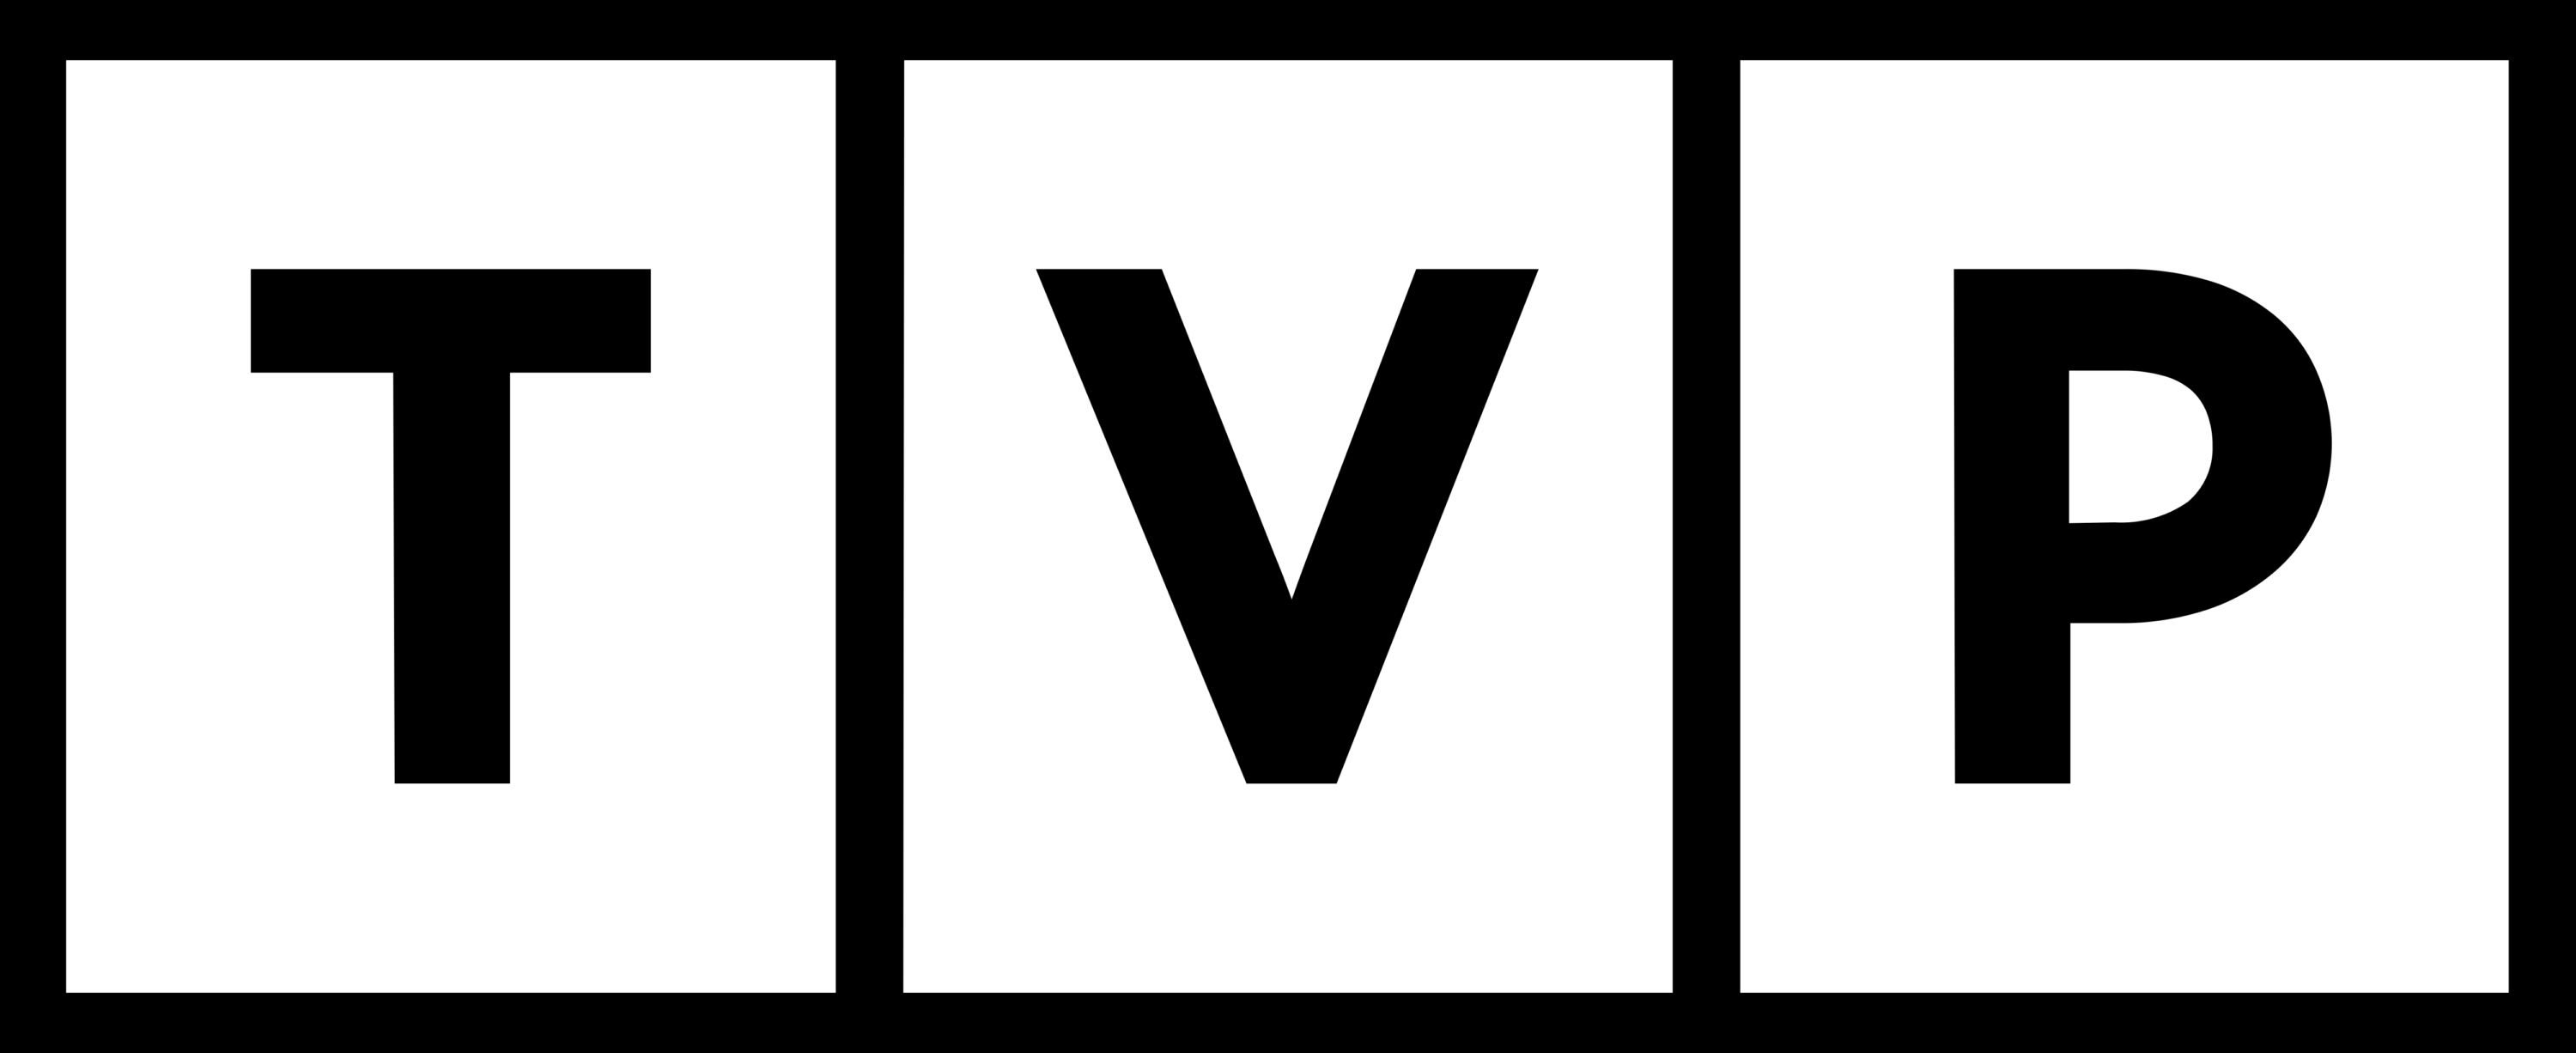 Telewizja Polska grids variant Logo 2022